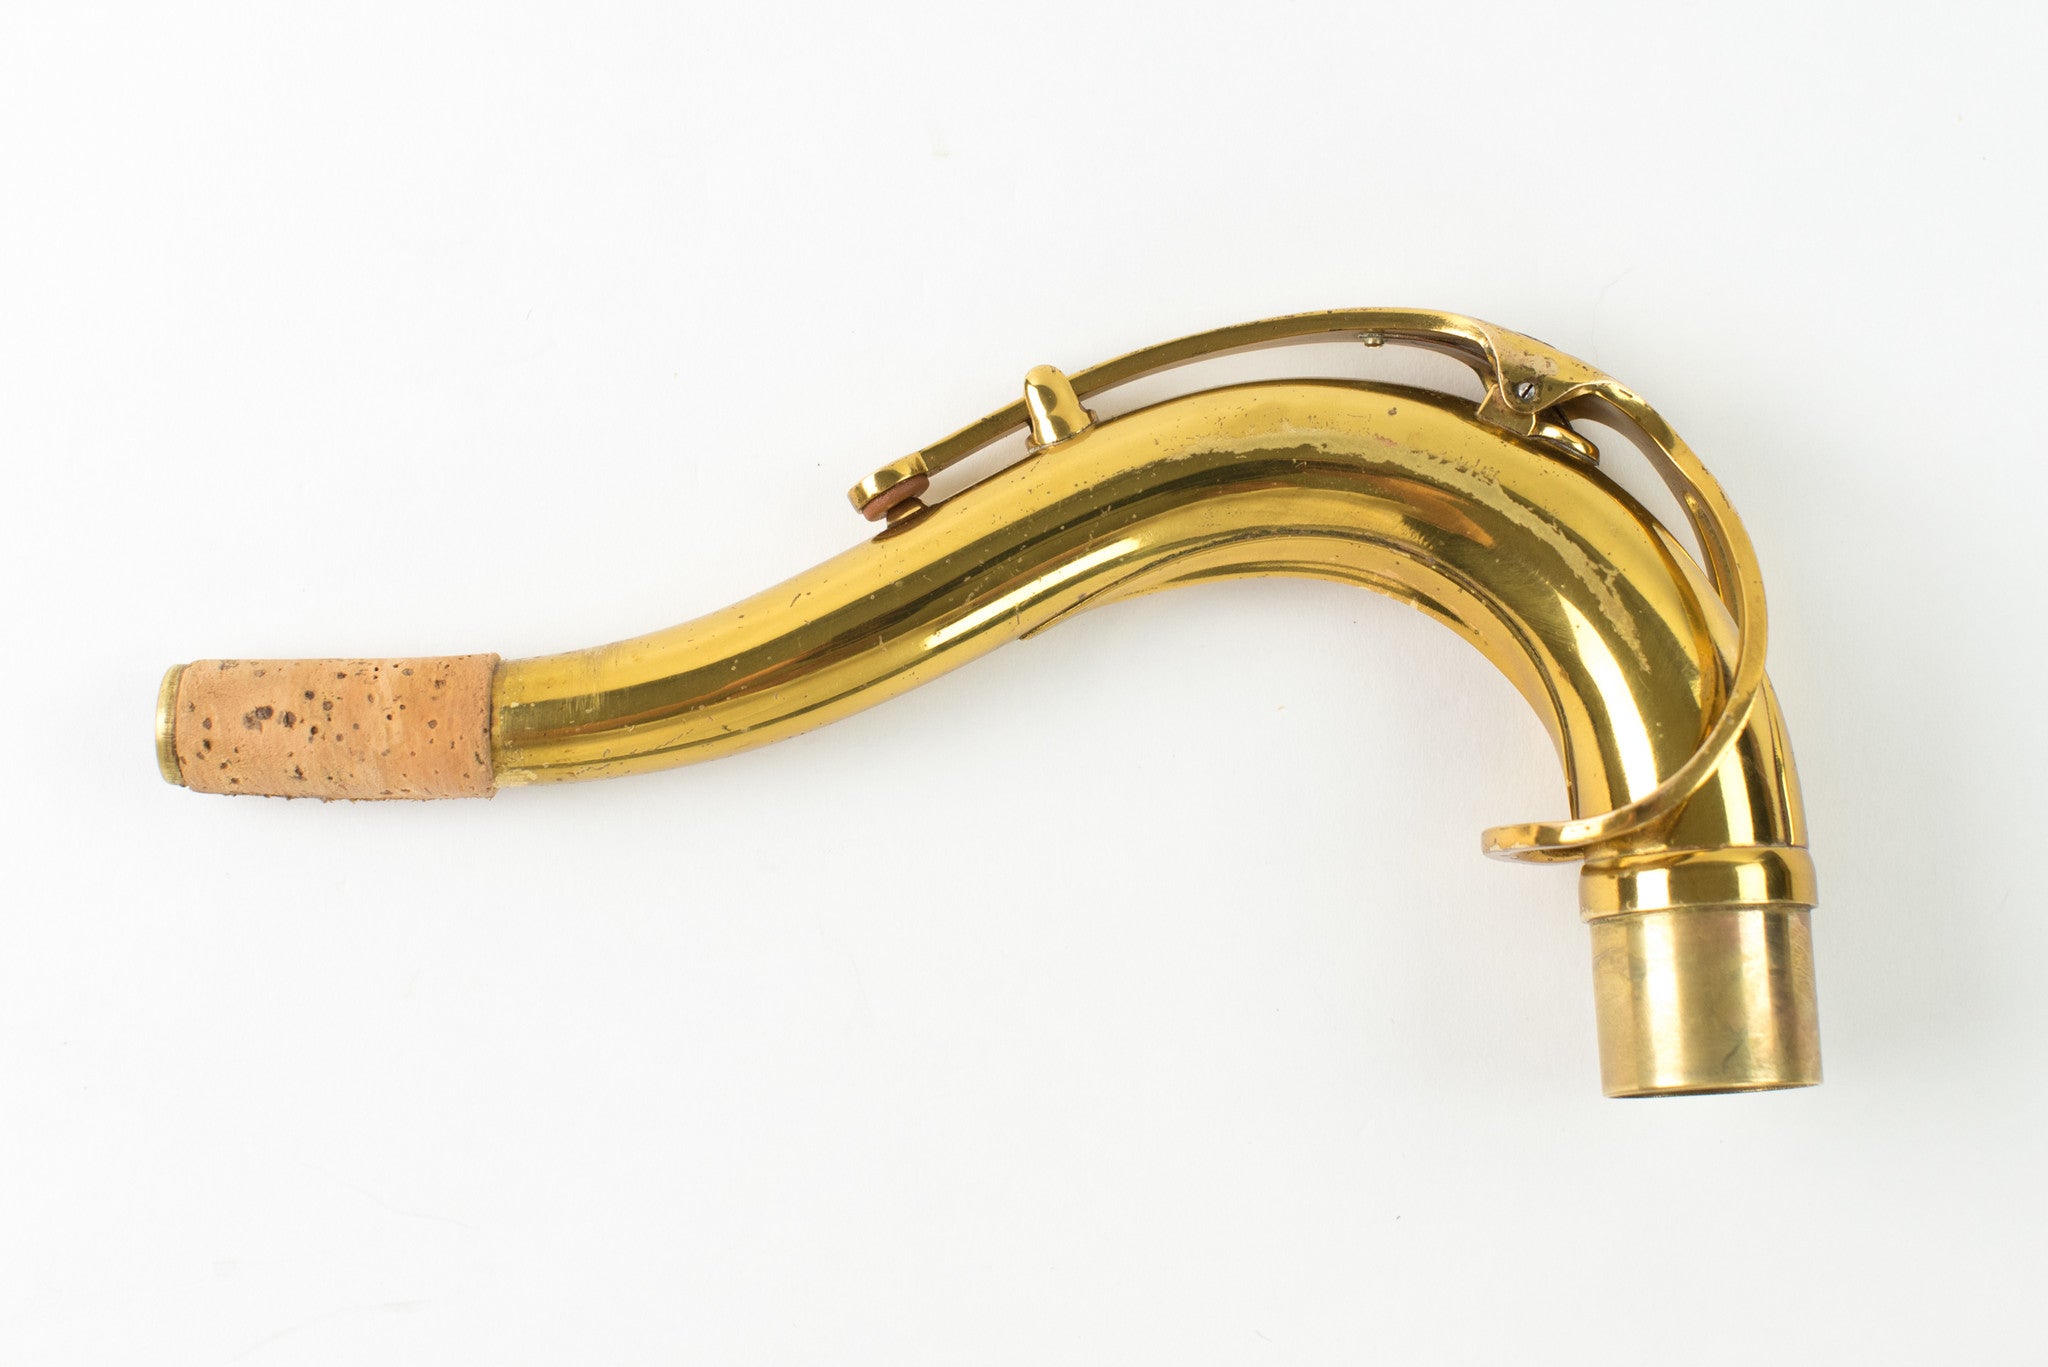 Selmer Mark VI Tenor Saxophone, 95% Original Lacquer, Fresh Overhaul